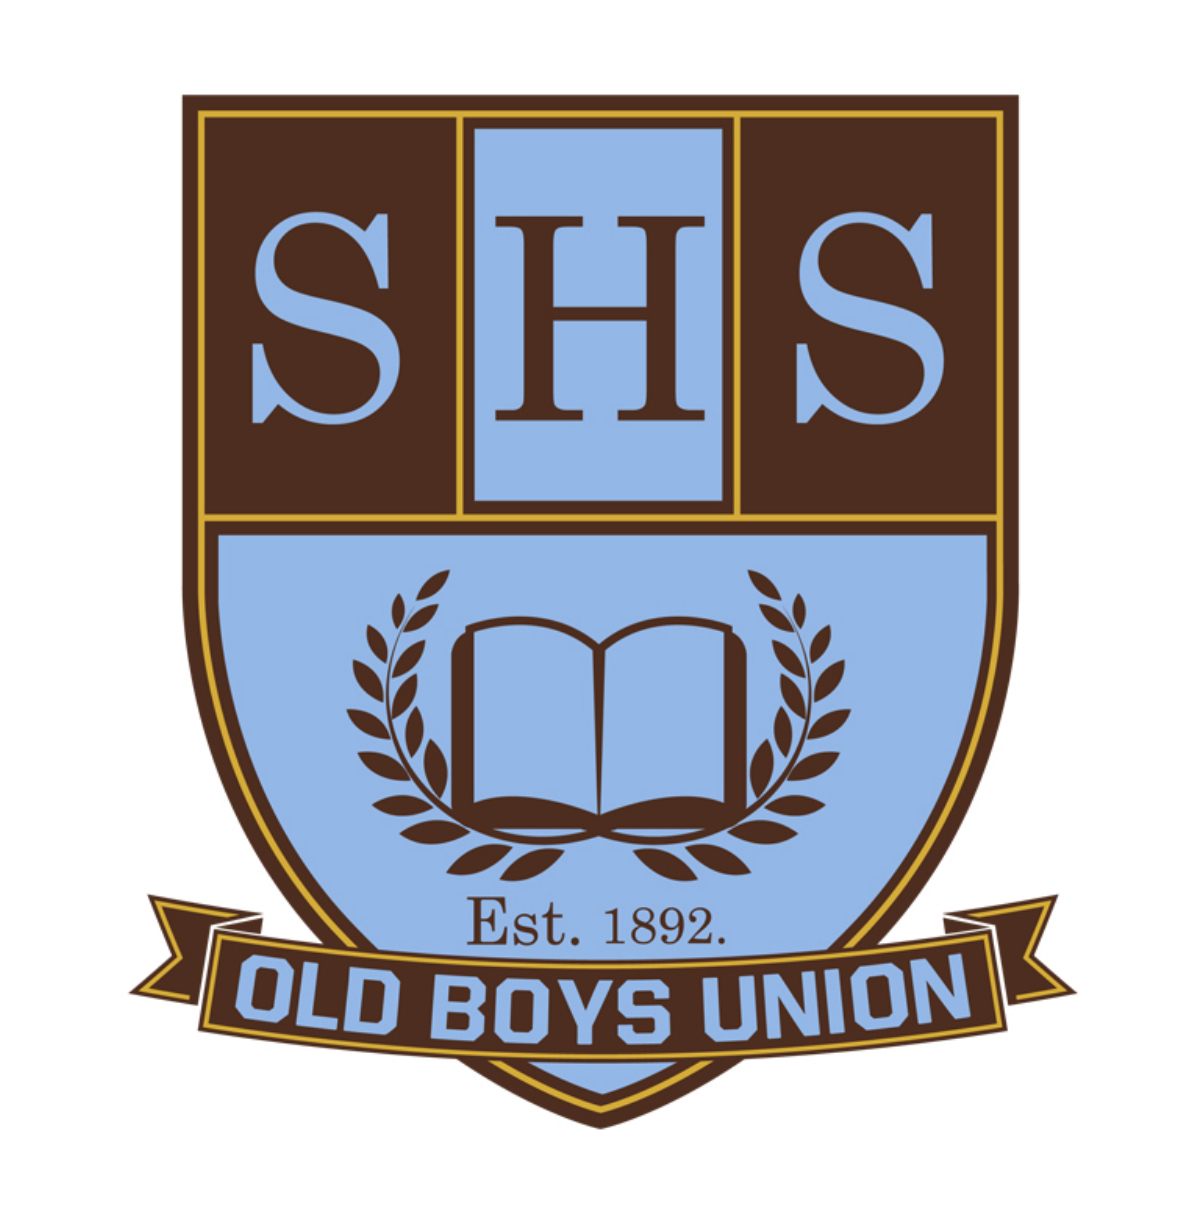 The 1976 SHOBS Club-logo